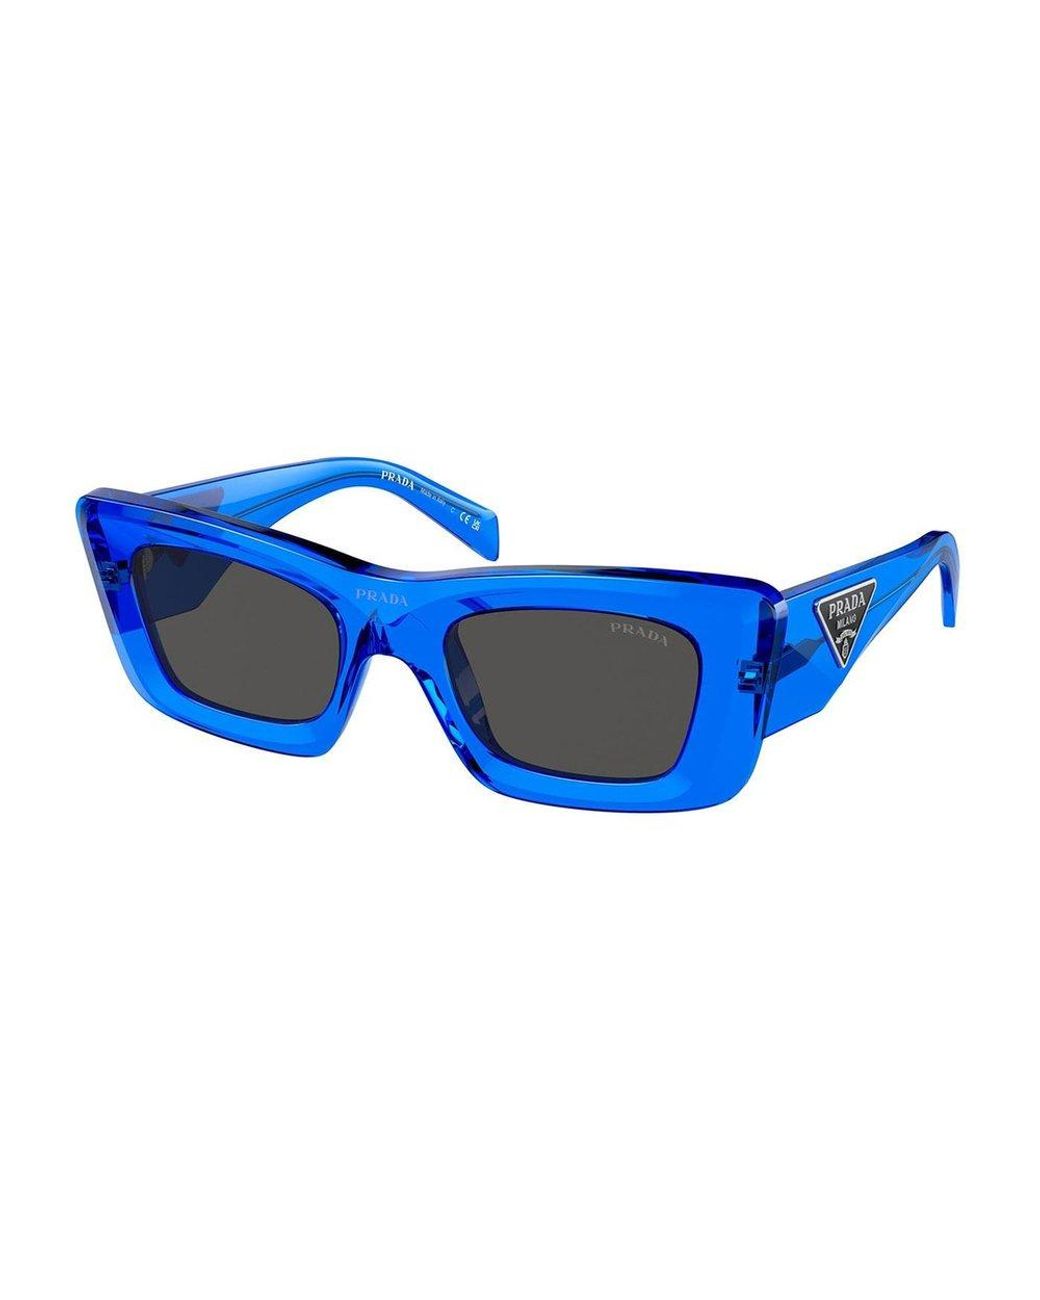 Prada Linea Rossa 59 mm Blue Sunglasses | World of Watches